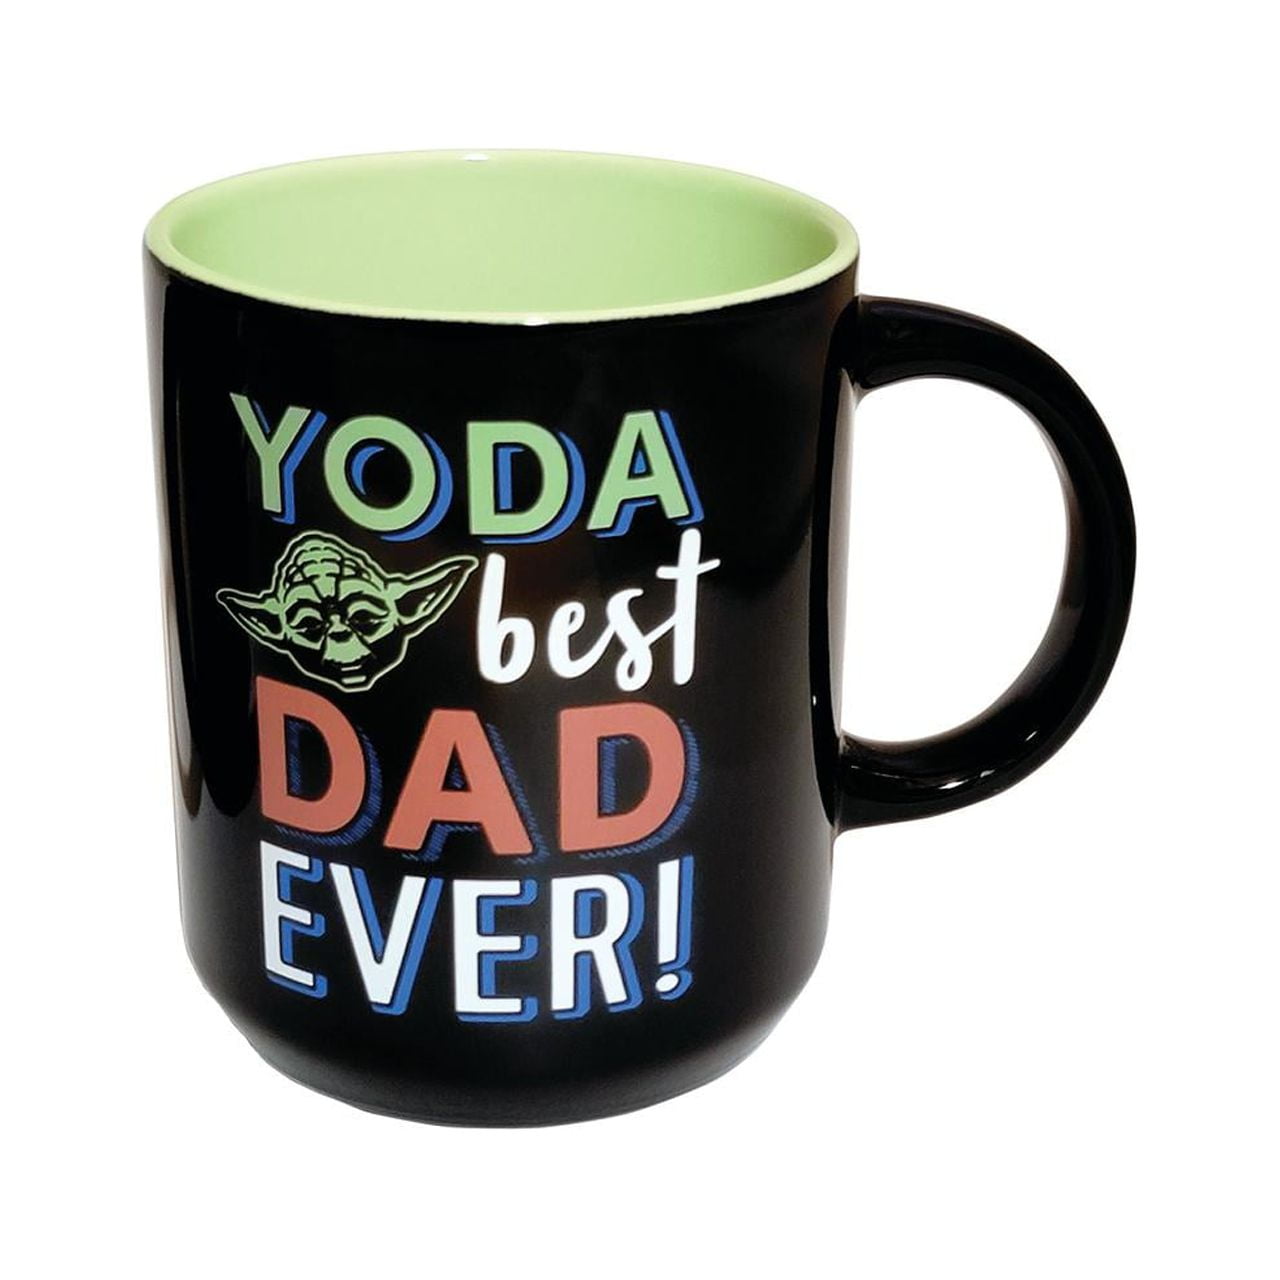 Star Wars Return of the Jedi 40th Anniversary Mug Warmer Set - Uncanny  Brands